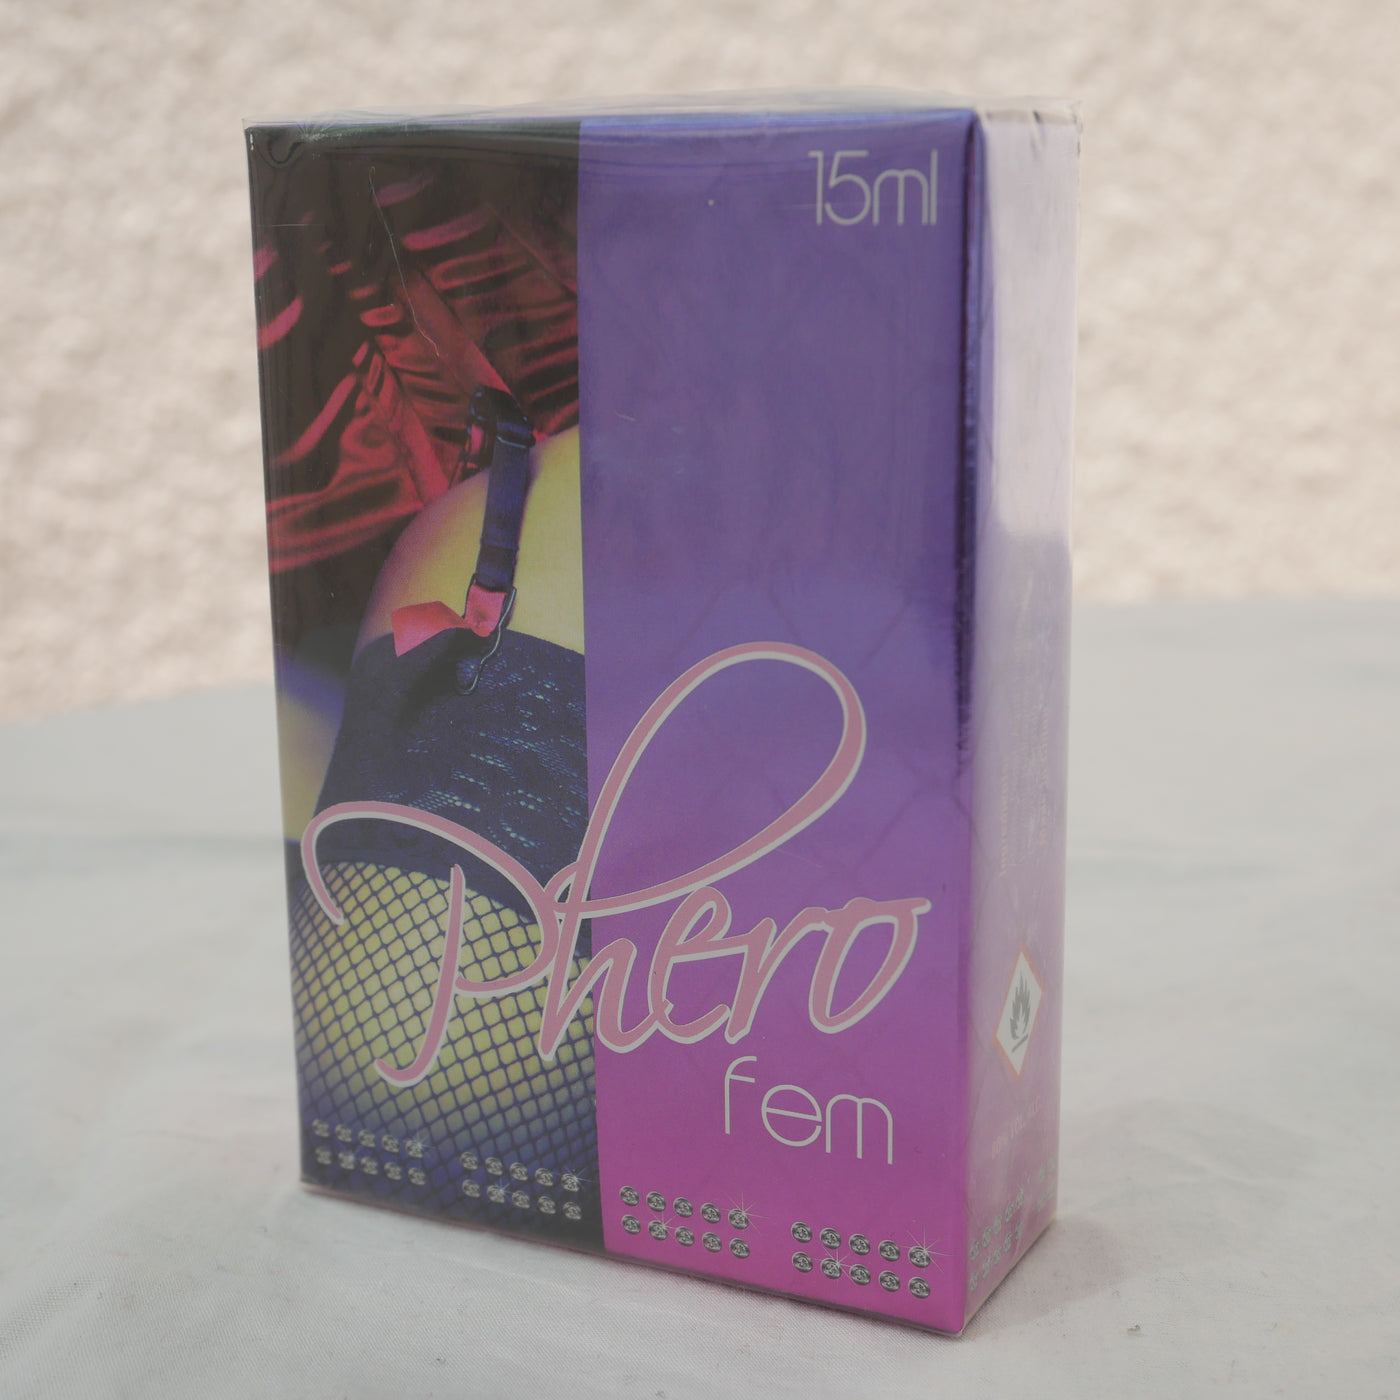 PHEROFEM Perfume pheromones for Women to Attract Men 15ml